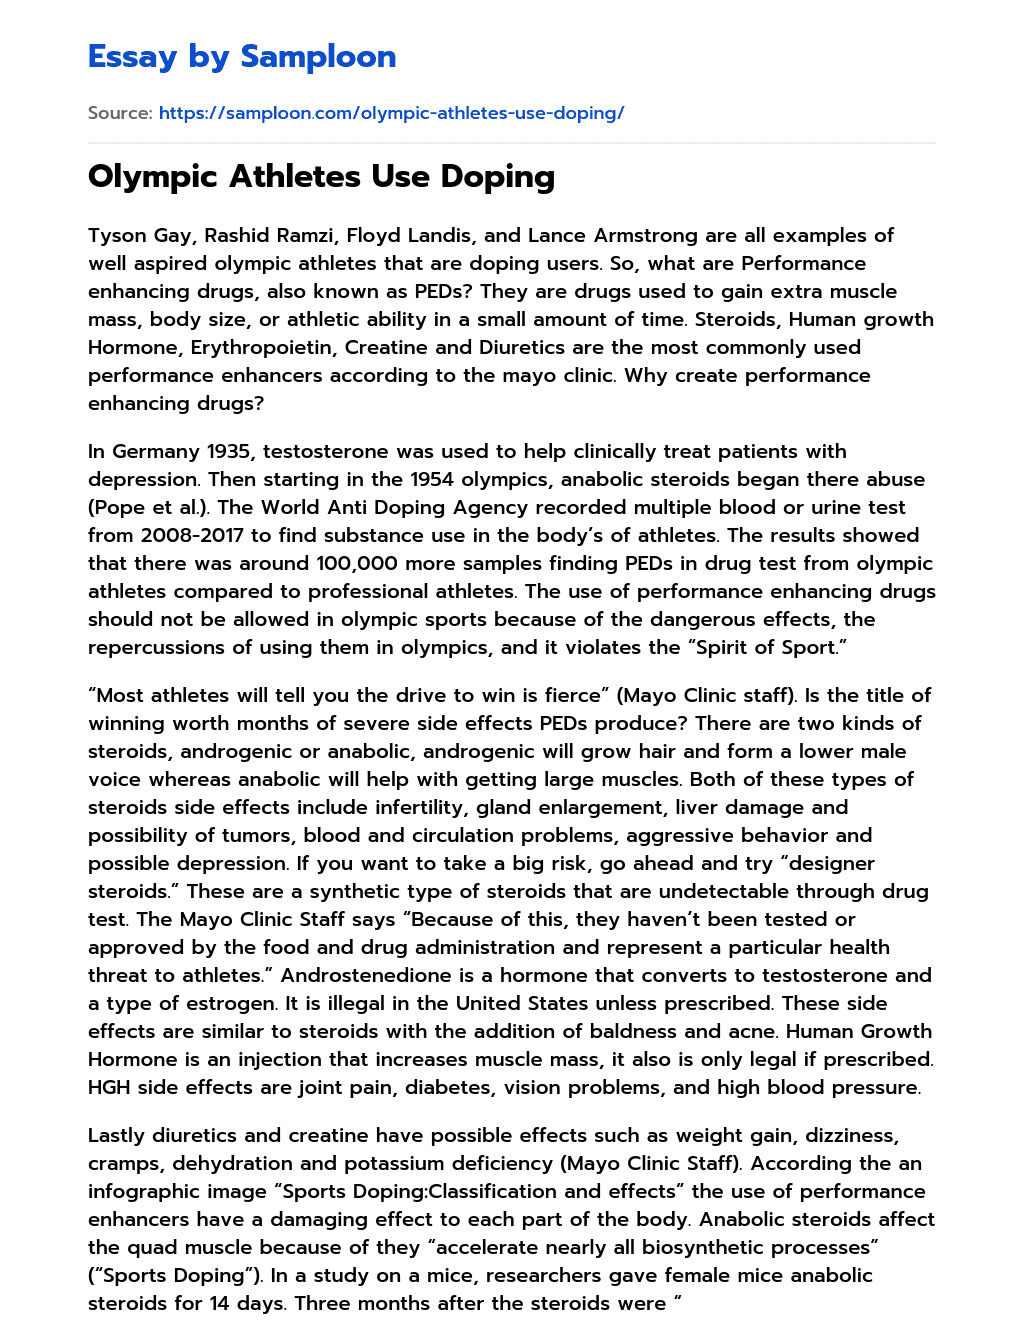 Olympic Athletes Use Doping essay